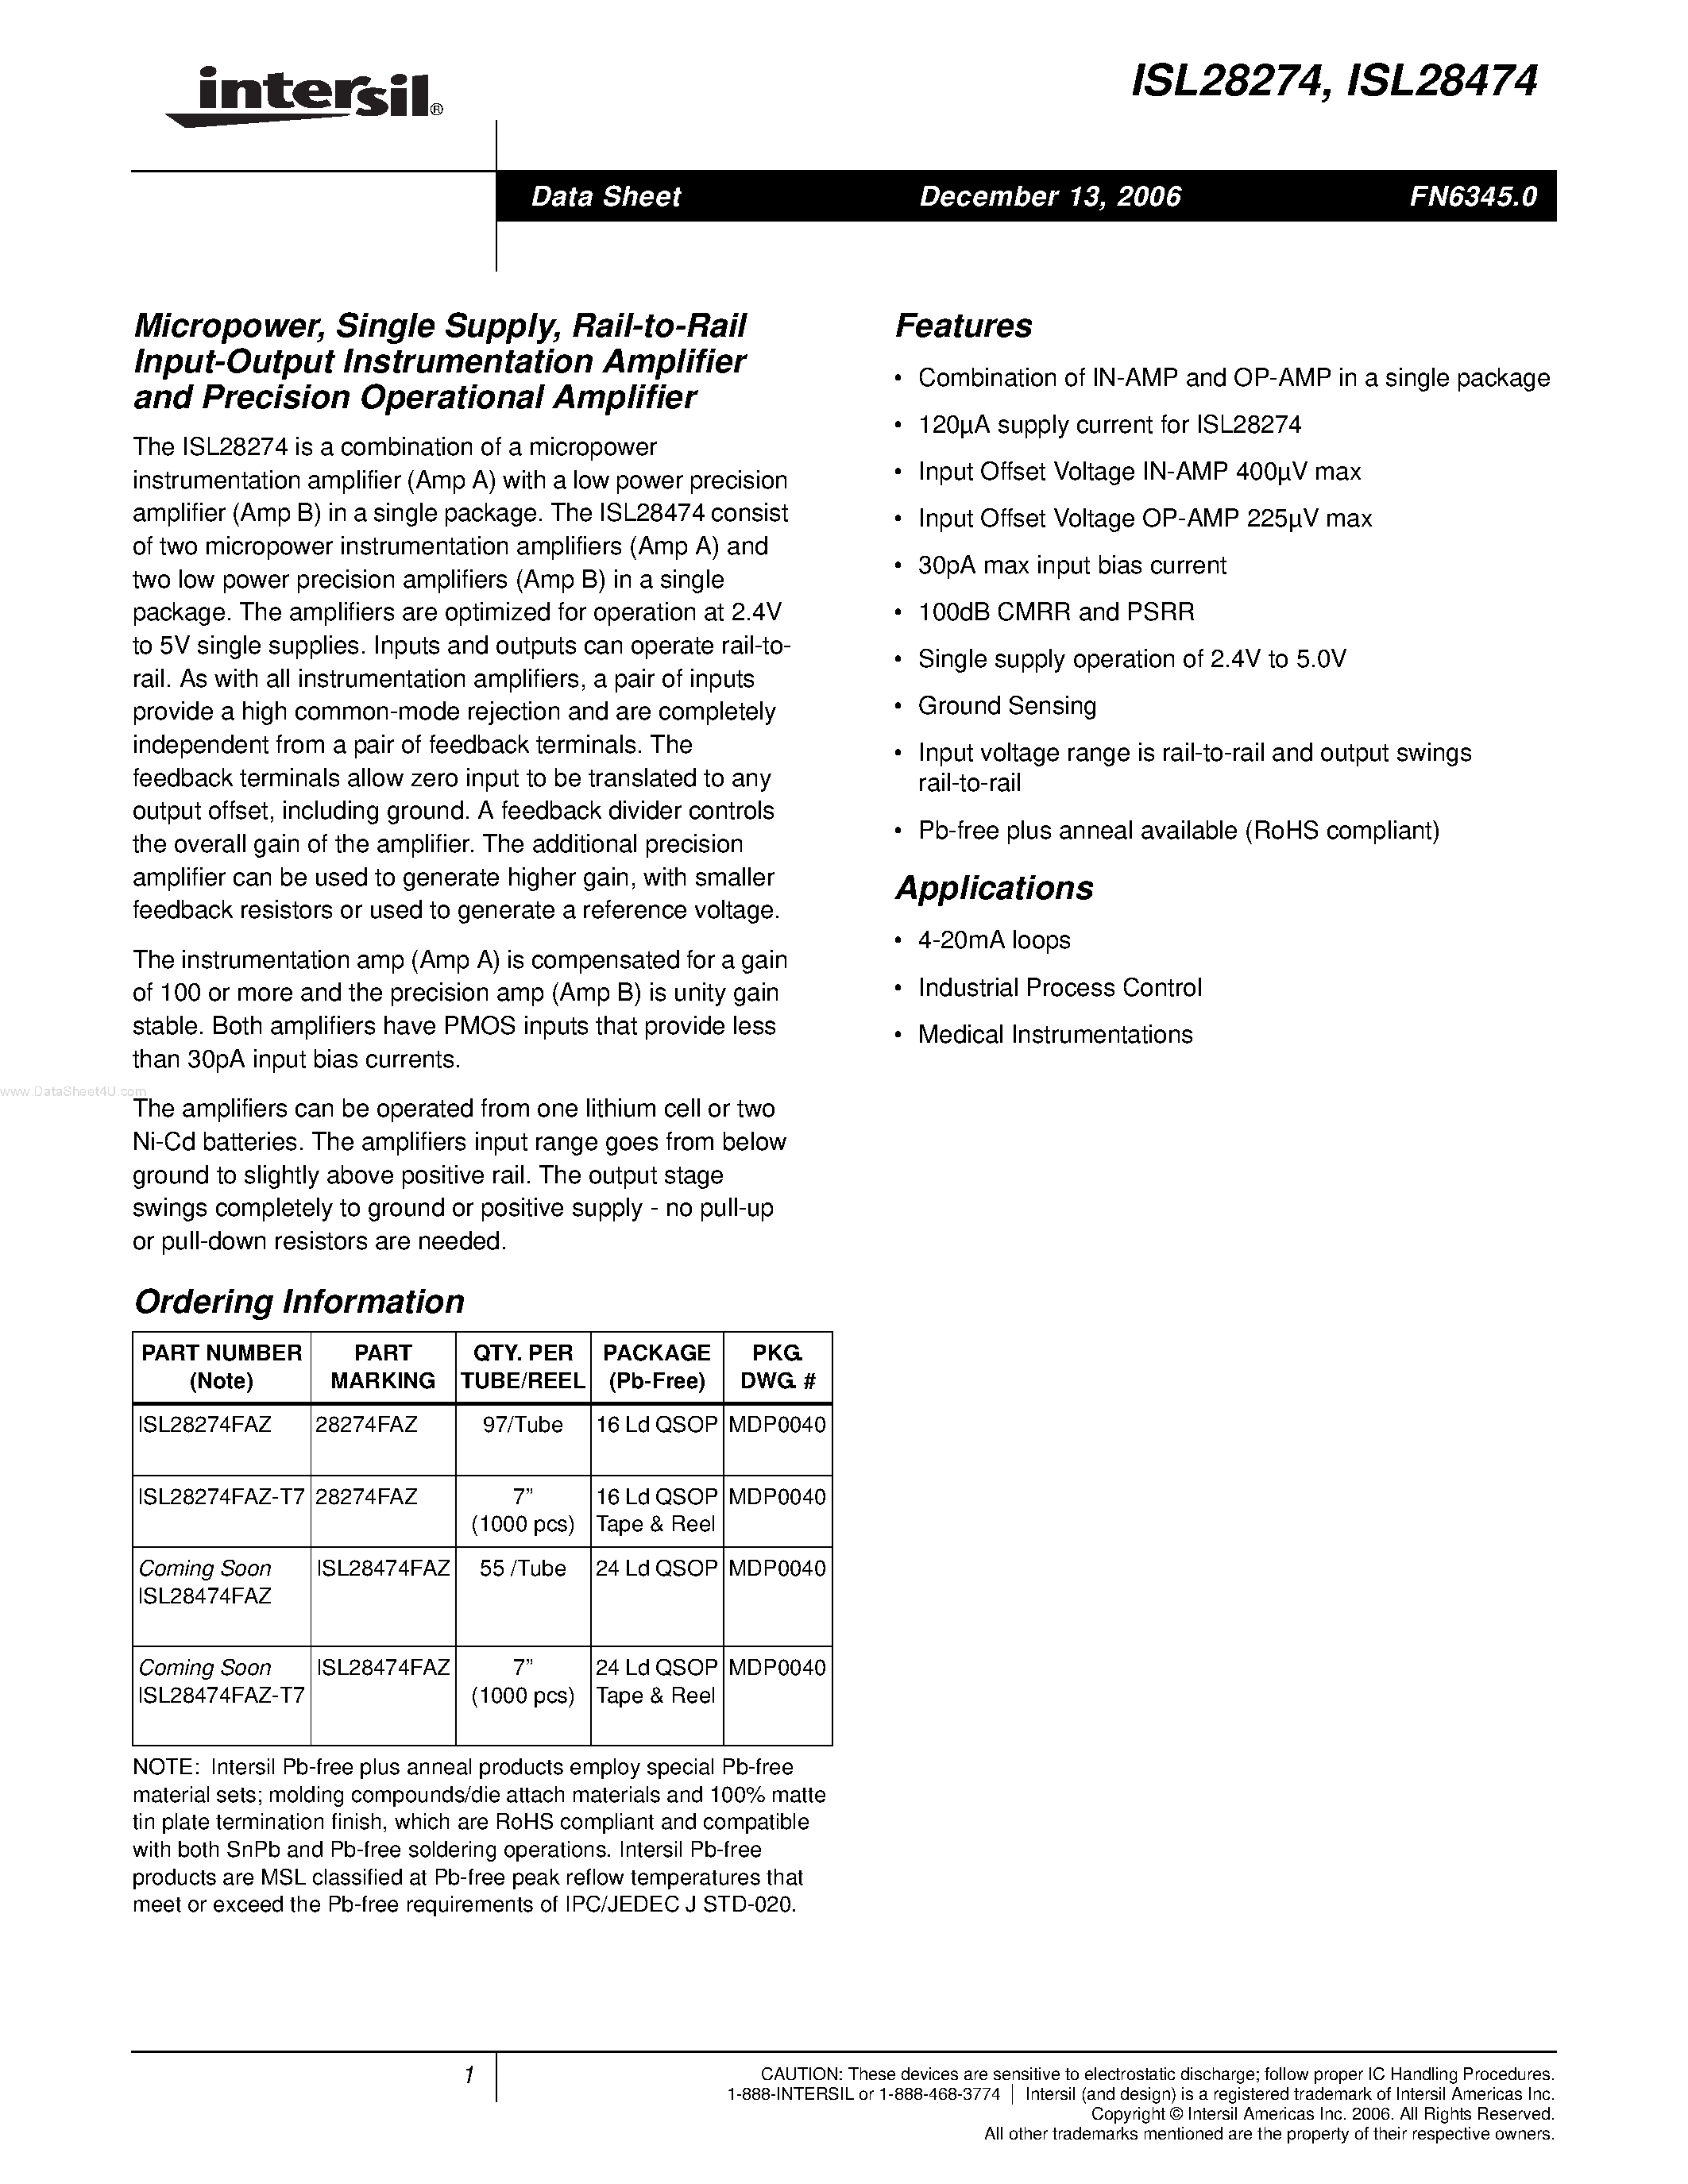 Datasheet ISL28274 - (ISL28274 / ISL28474) Rail-to-Rail Input-Output Instrumentation Amplifier and Precision Operational Amplifier page 1